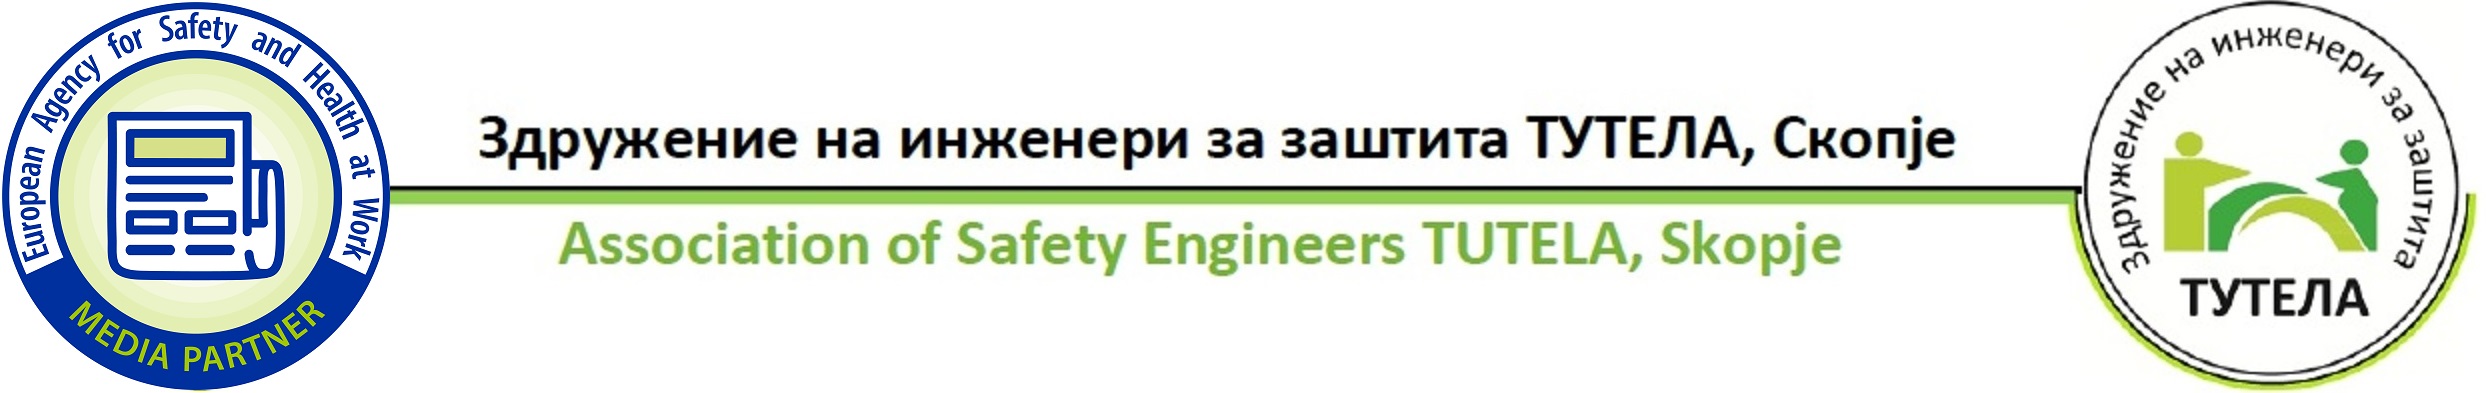 Здружение на инженери за заштита ТУТЕЛА / Association of Safety Engineers TUTELA